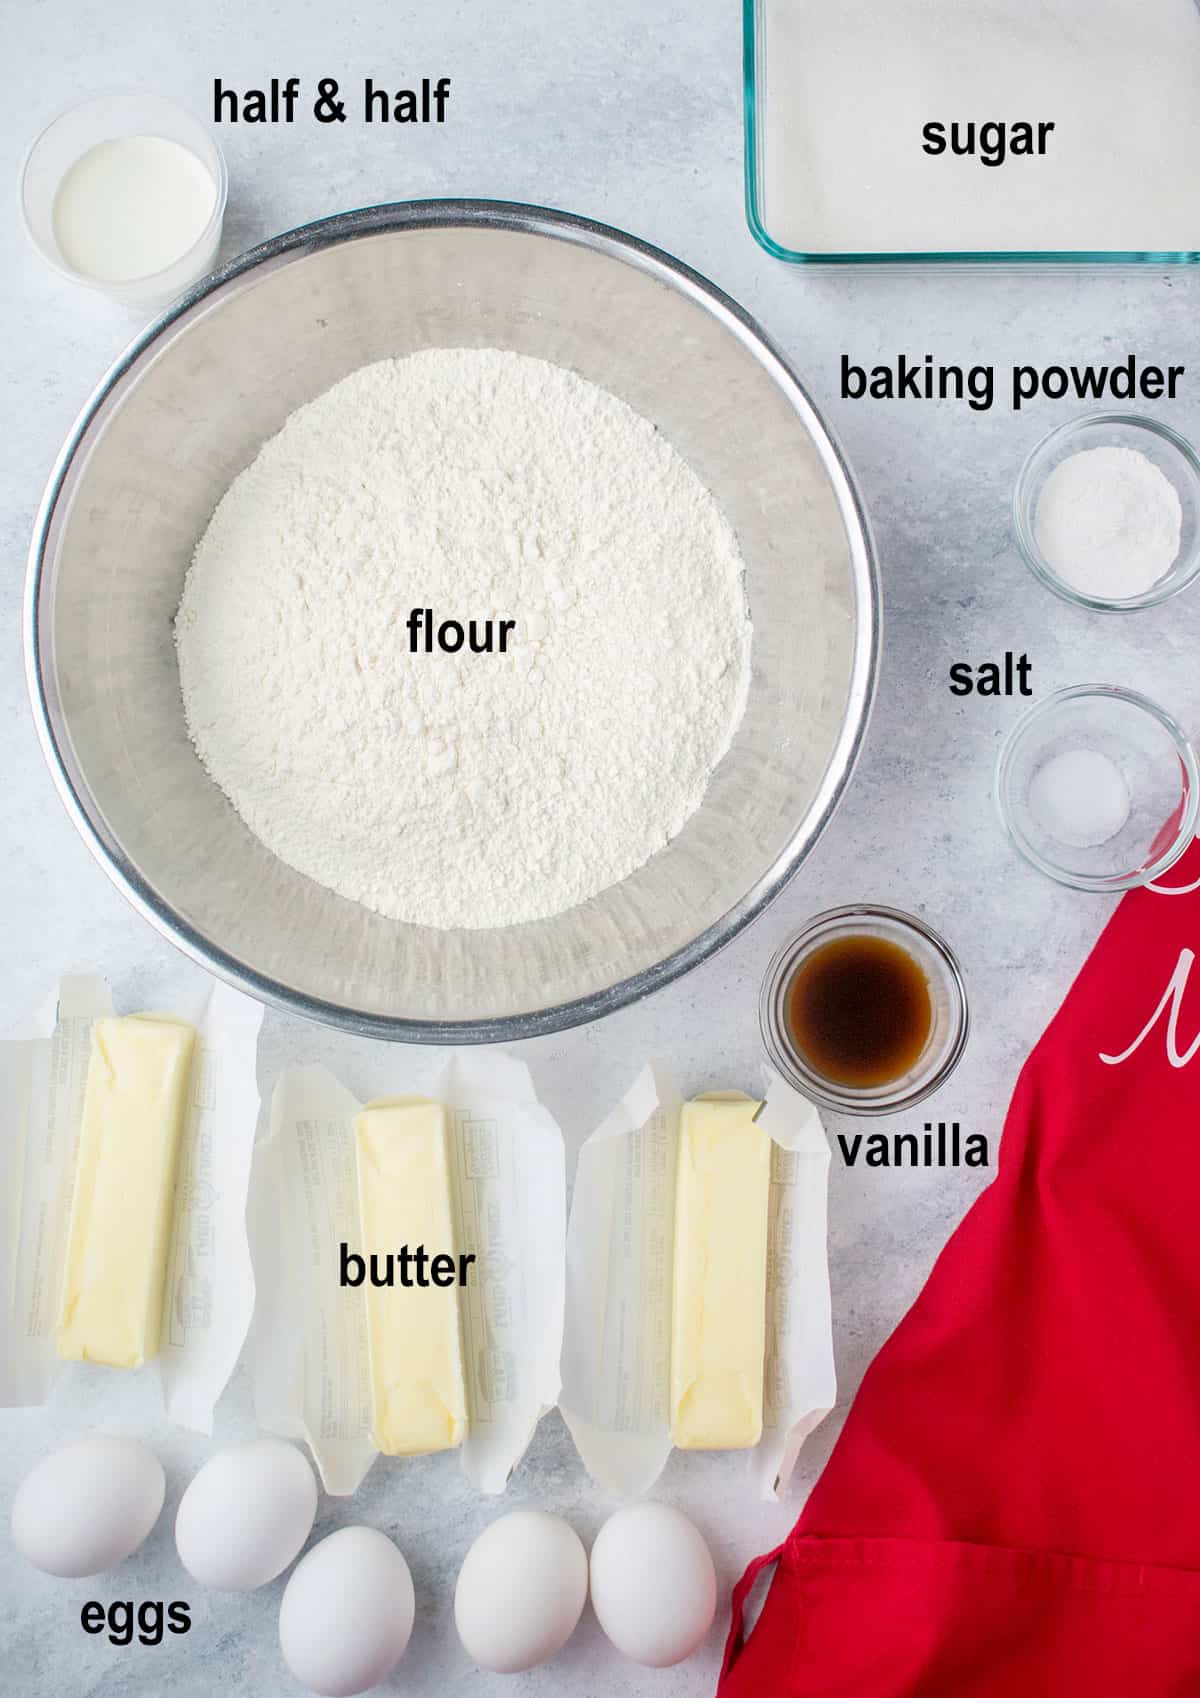 half & half, sugar, baking powder, flour, salt, vanilla, butter, eggs.